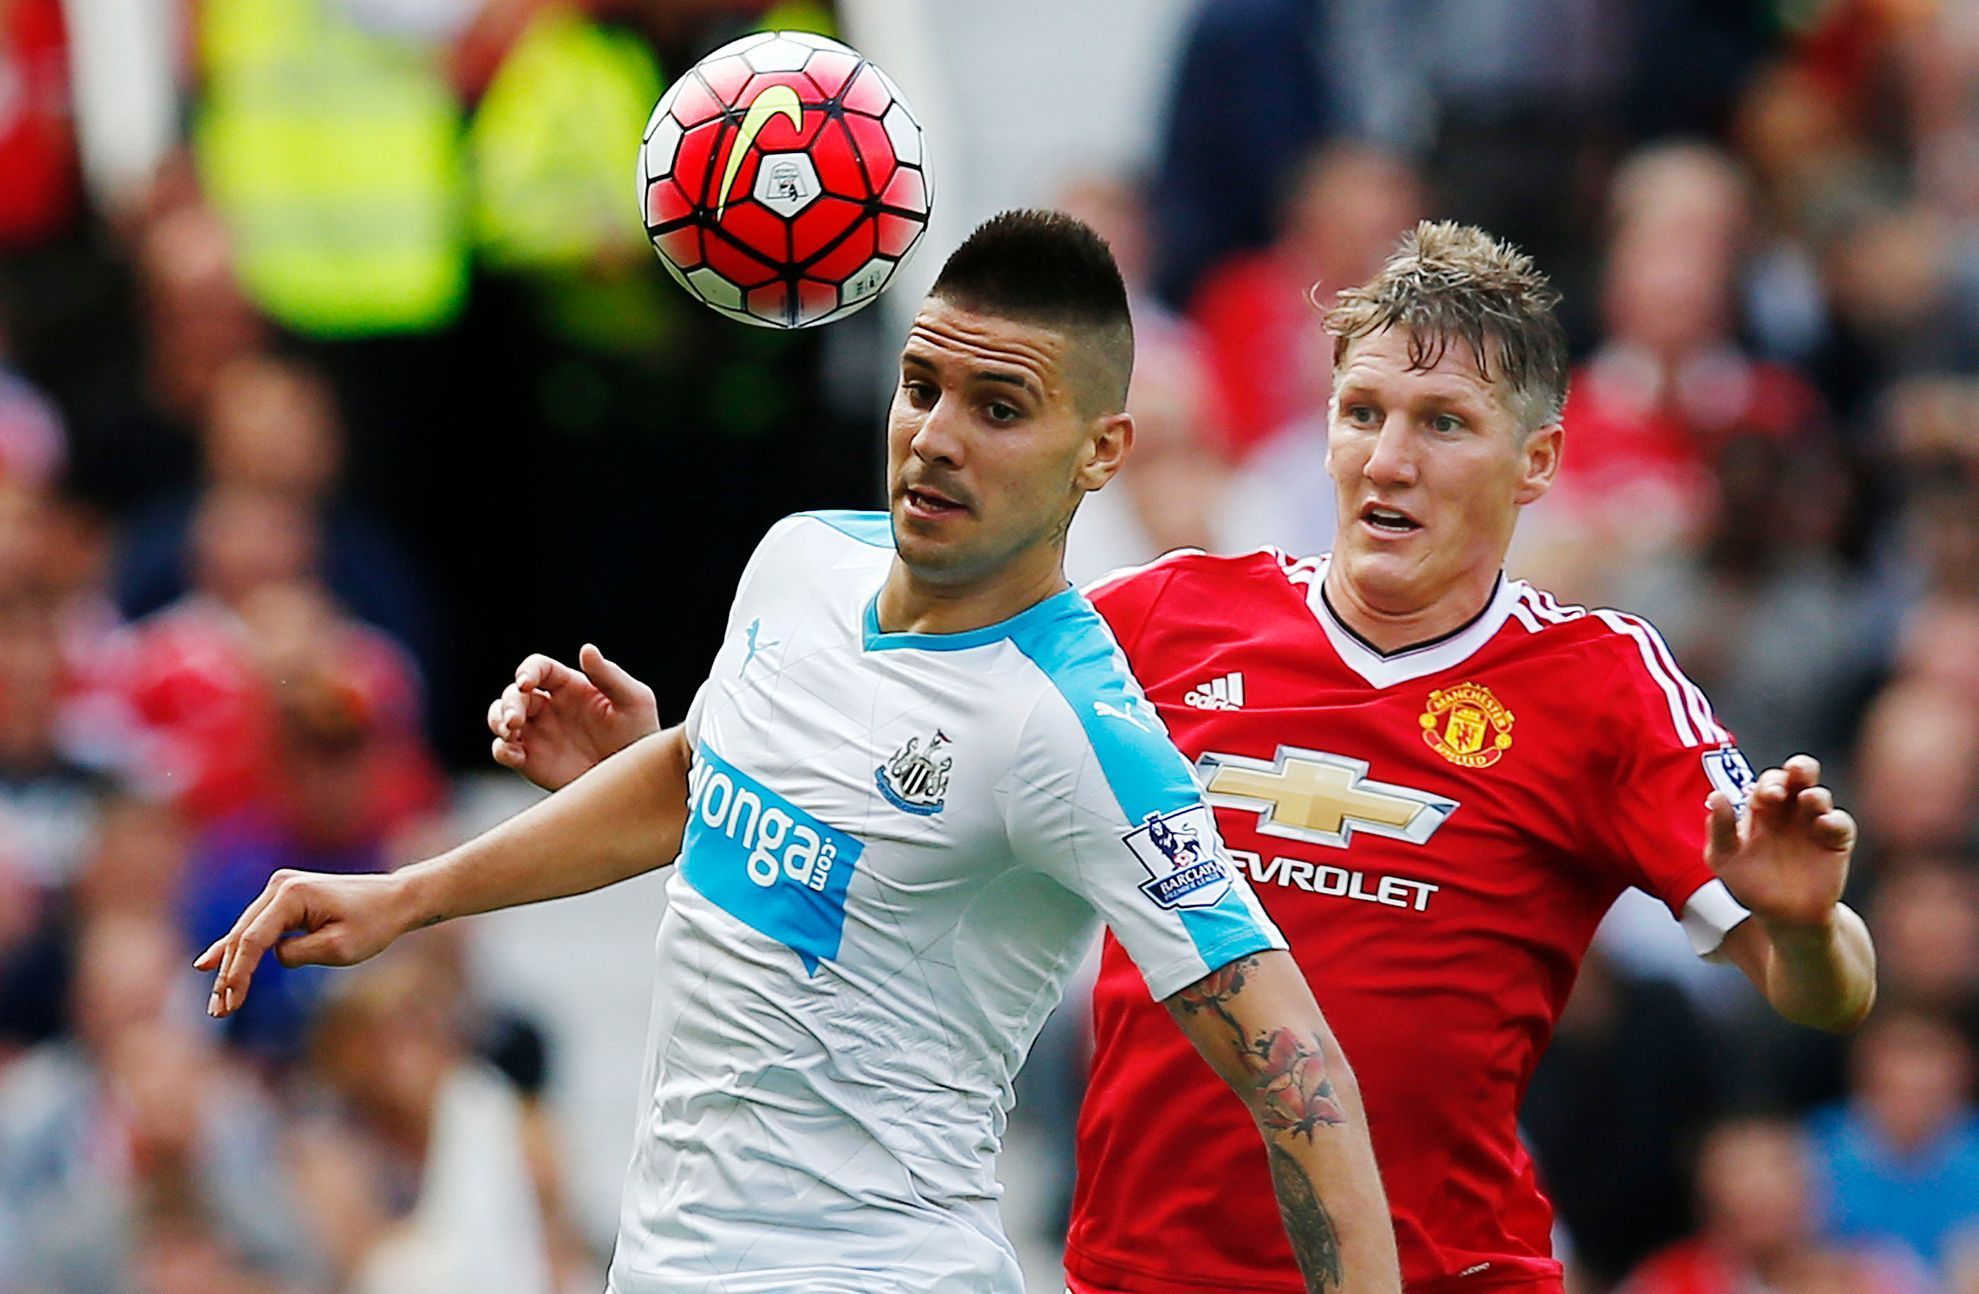 Newcastle's Aleksandar Mitrovic in action with Manchester United's Bastian Schweinsteiger